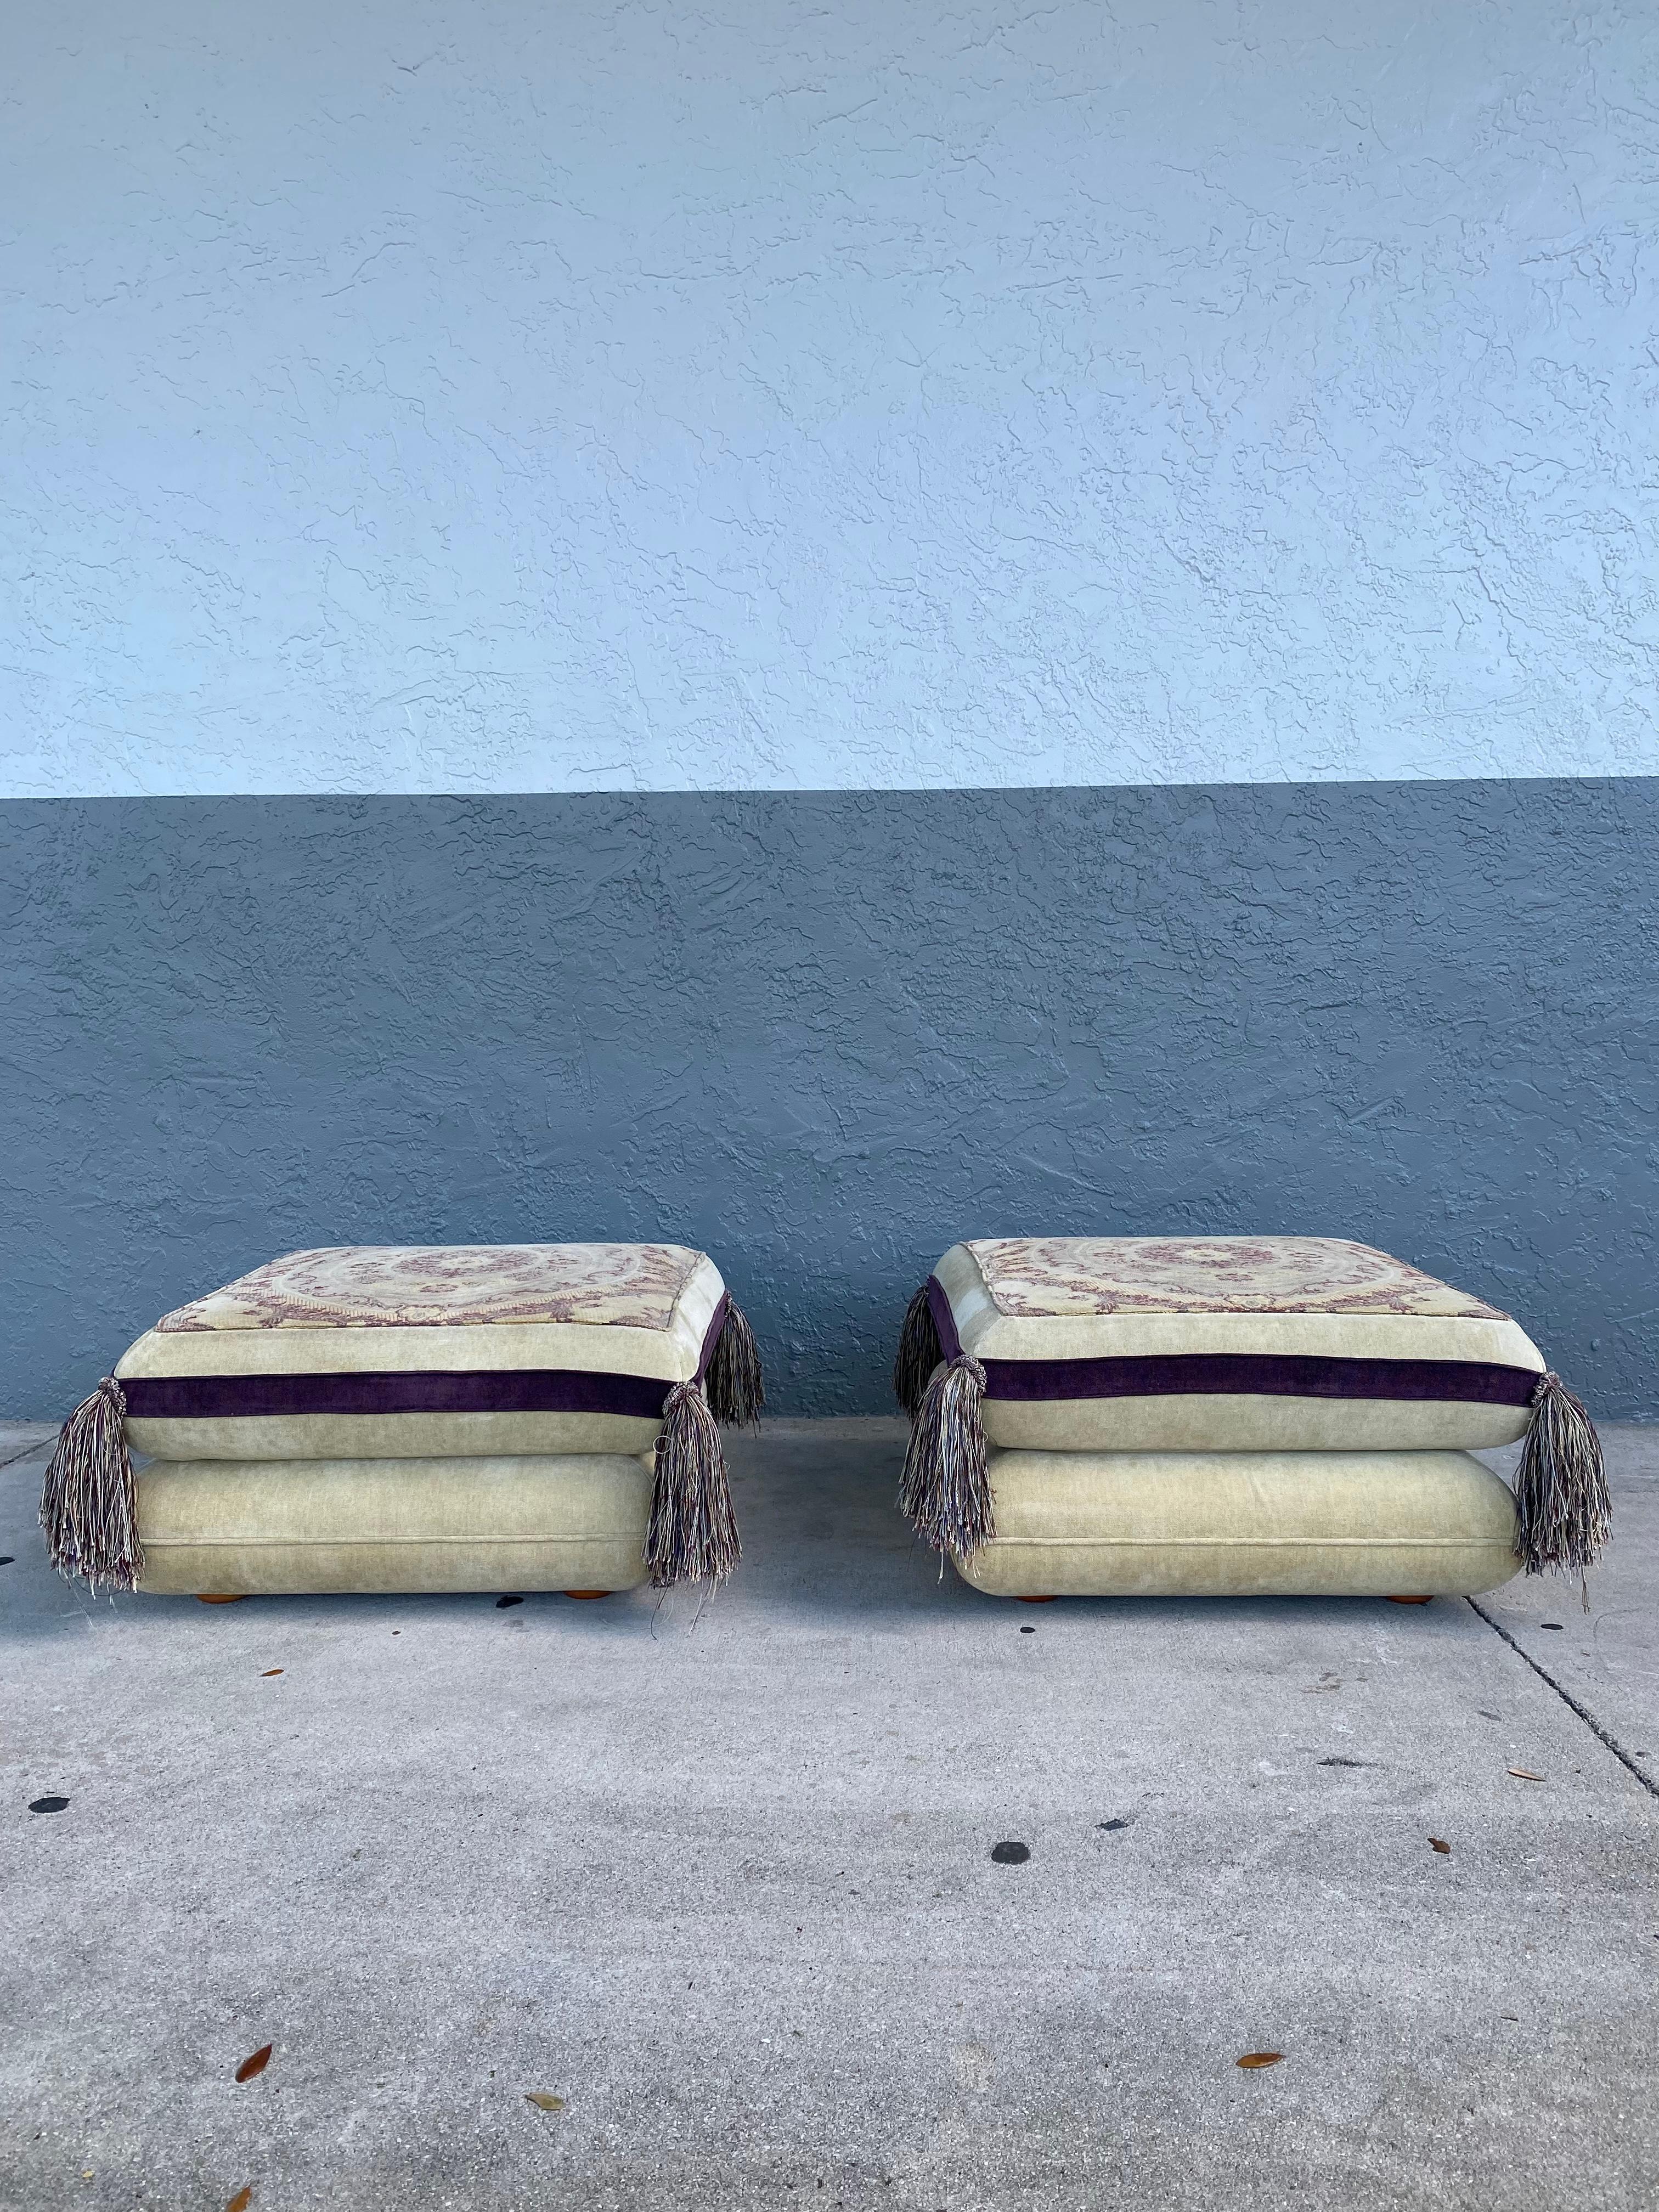 American Rare Roche Bobois “Mah Jong” Style Floor Pillowtop Ottoman Stools, Set of 2 For Sale